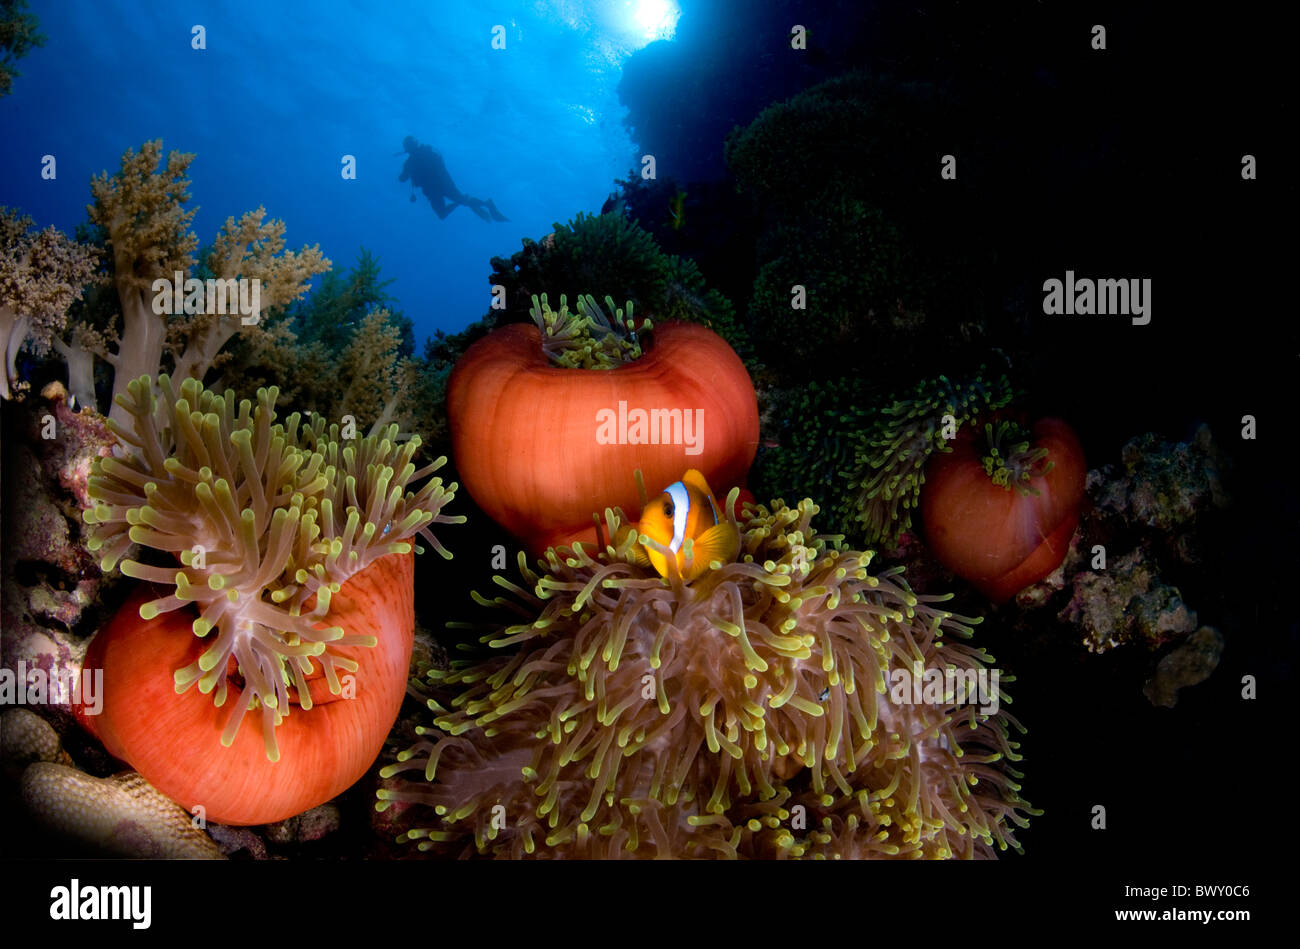 Magnificent anemone (Heteractis-magnifica) and anemone fish Amphiprion-bicinctus Stock Photo